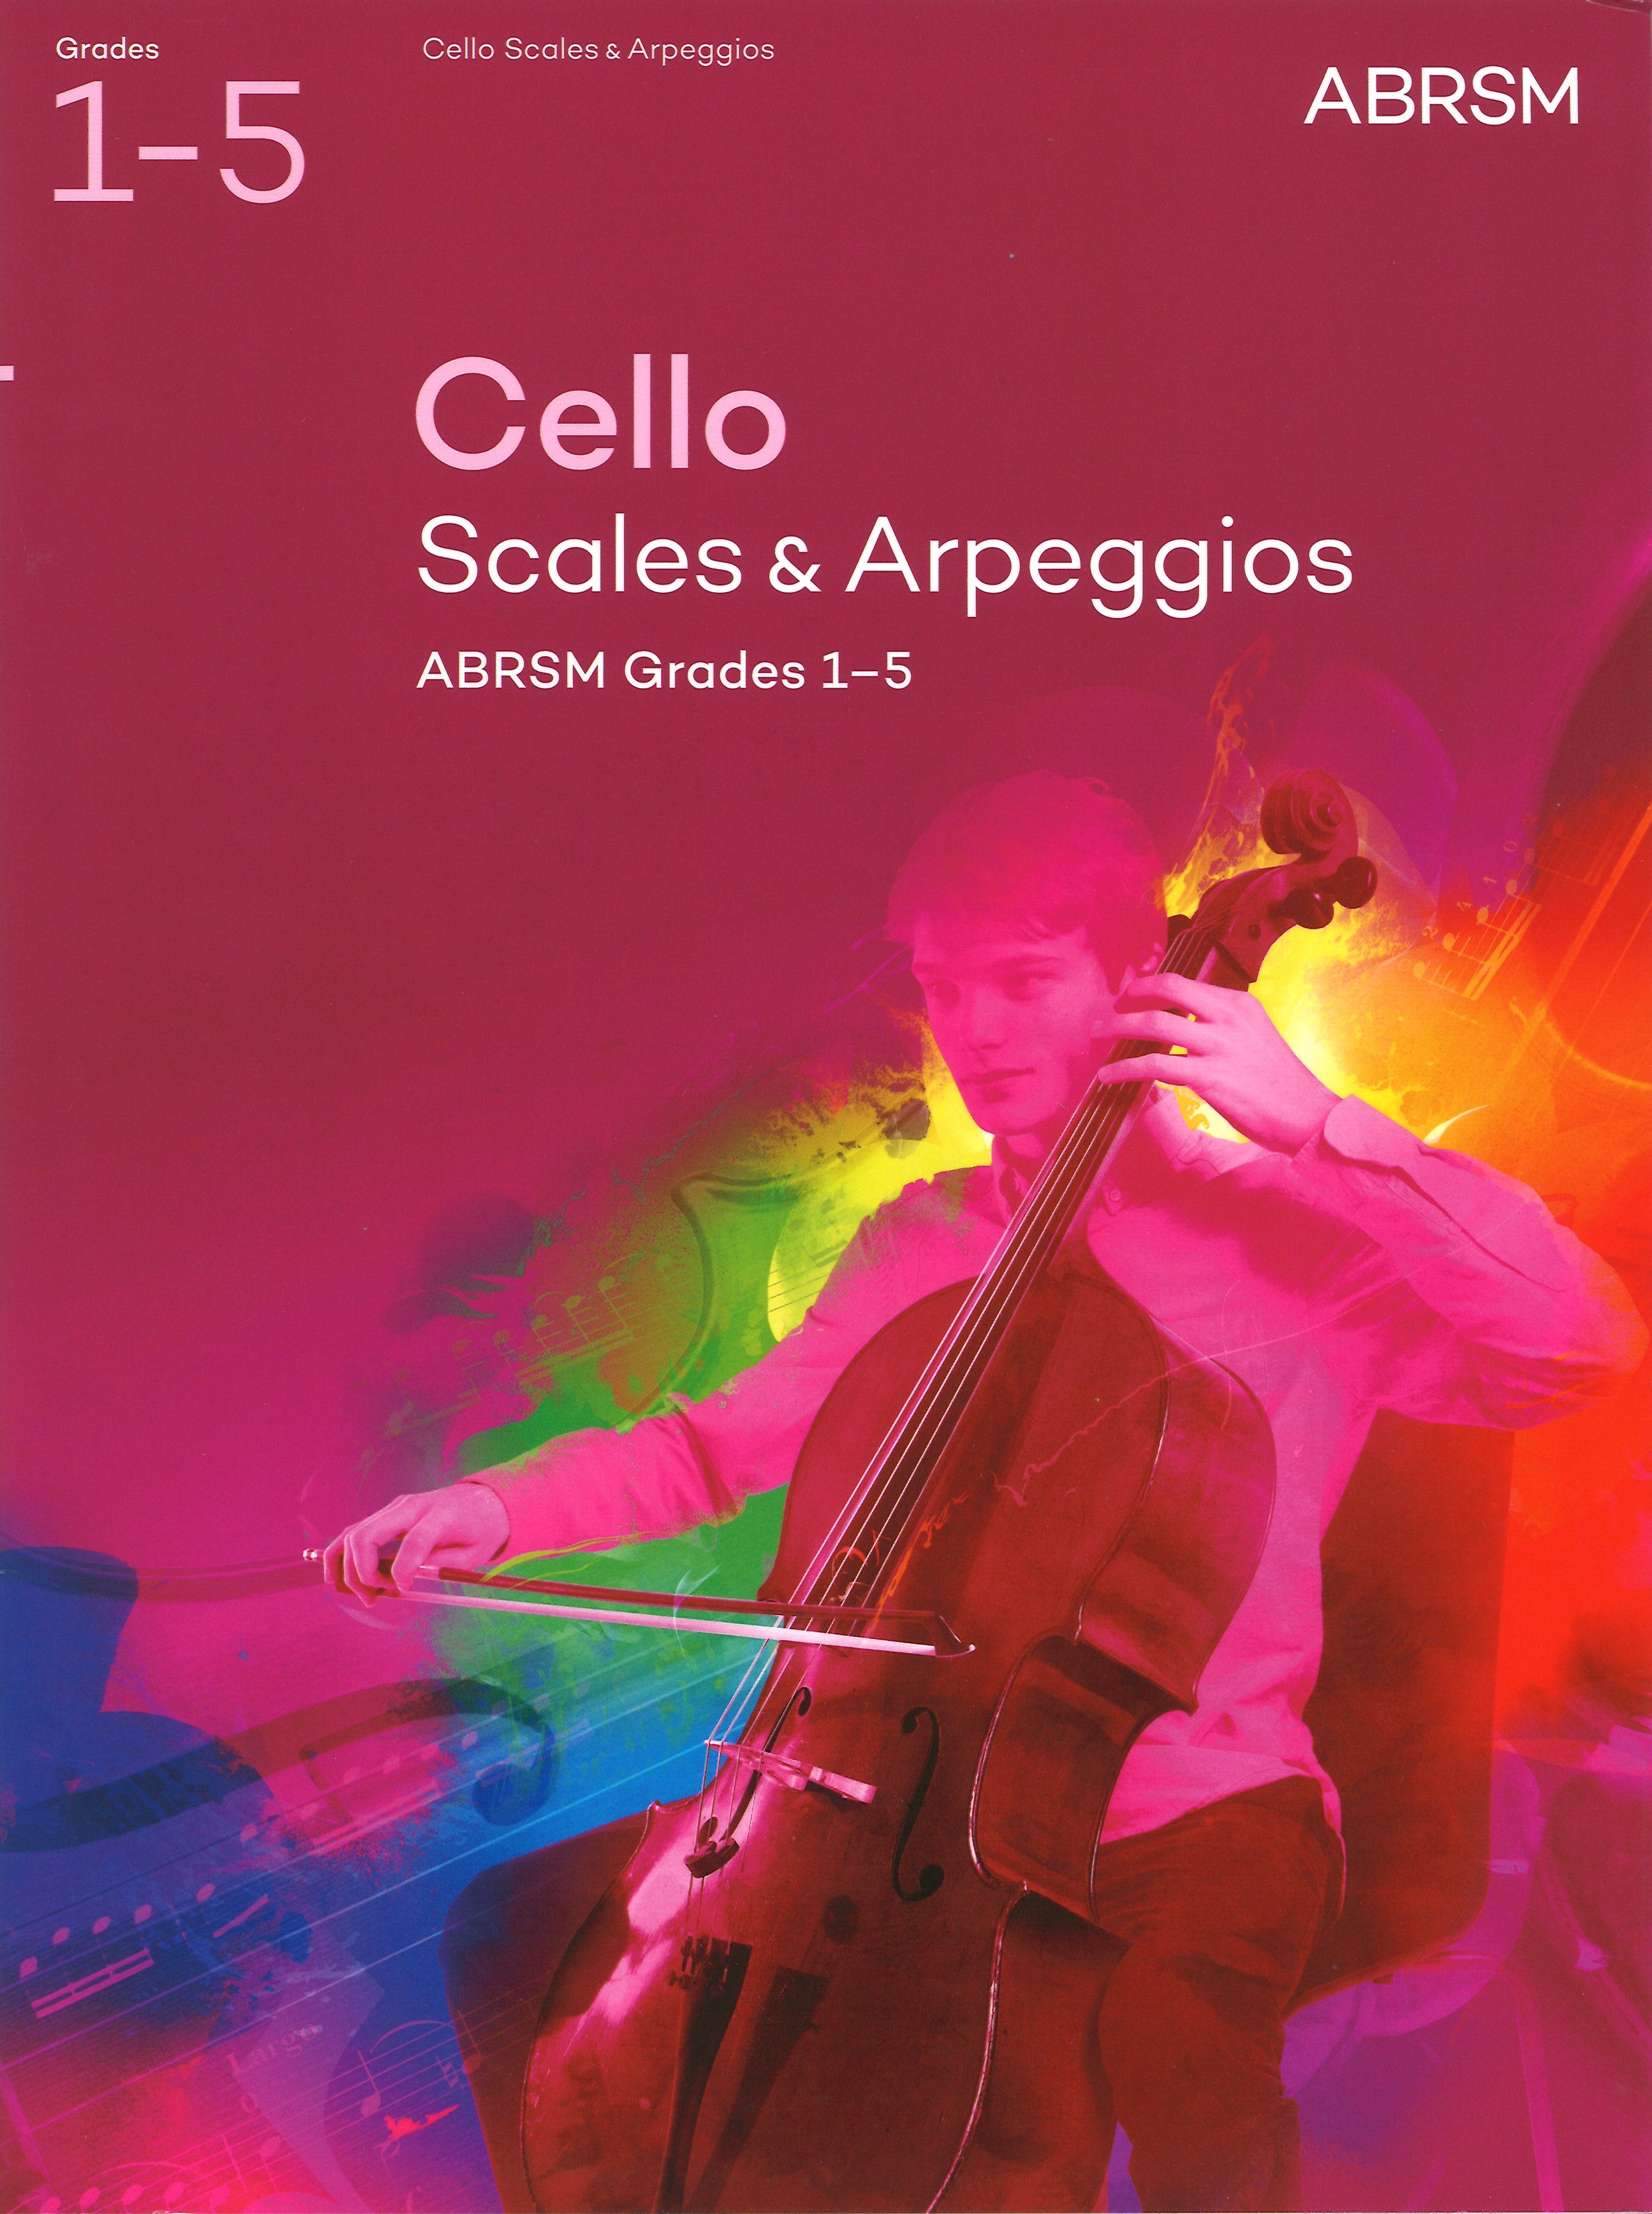 Cello Scales & Arpeggios 2012 Grades 1-5 Abrsm Sheet Music Songbook